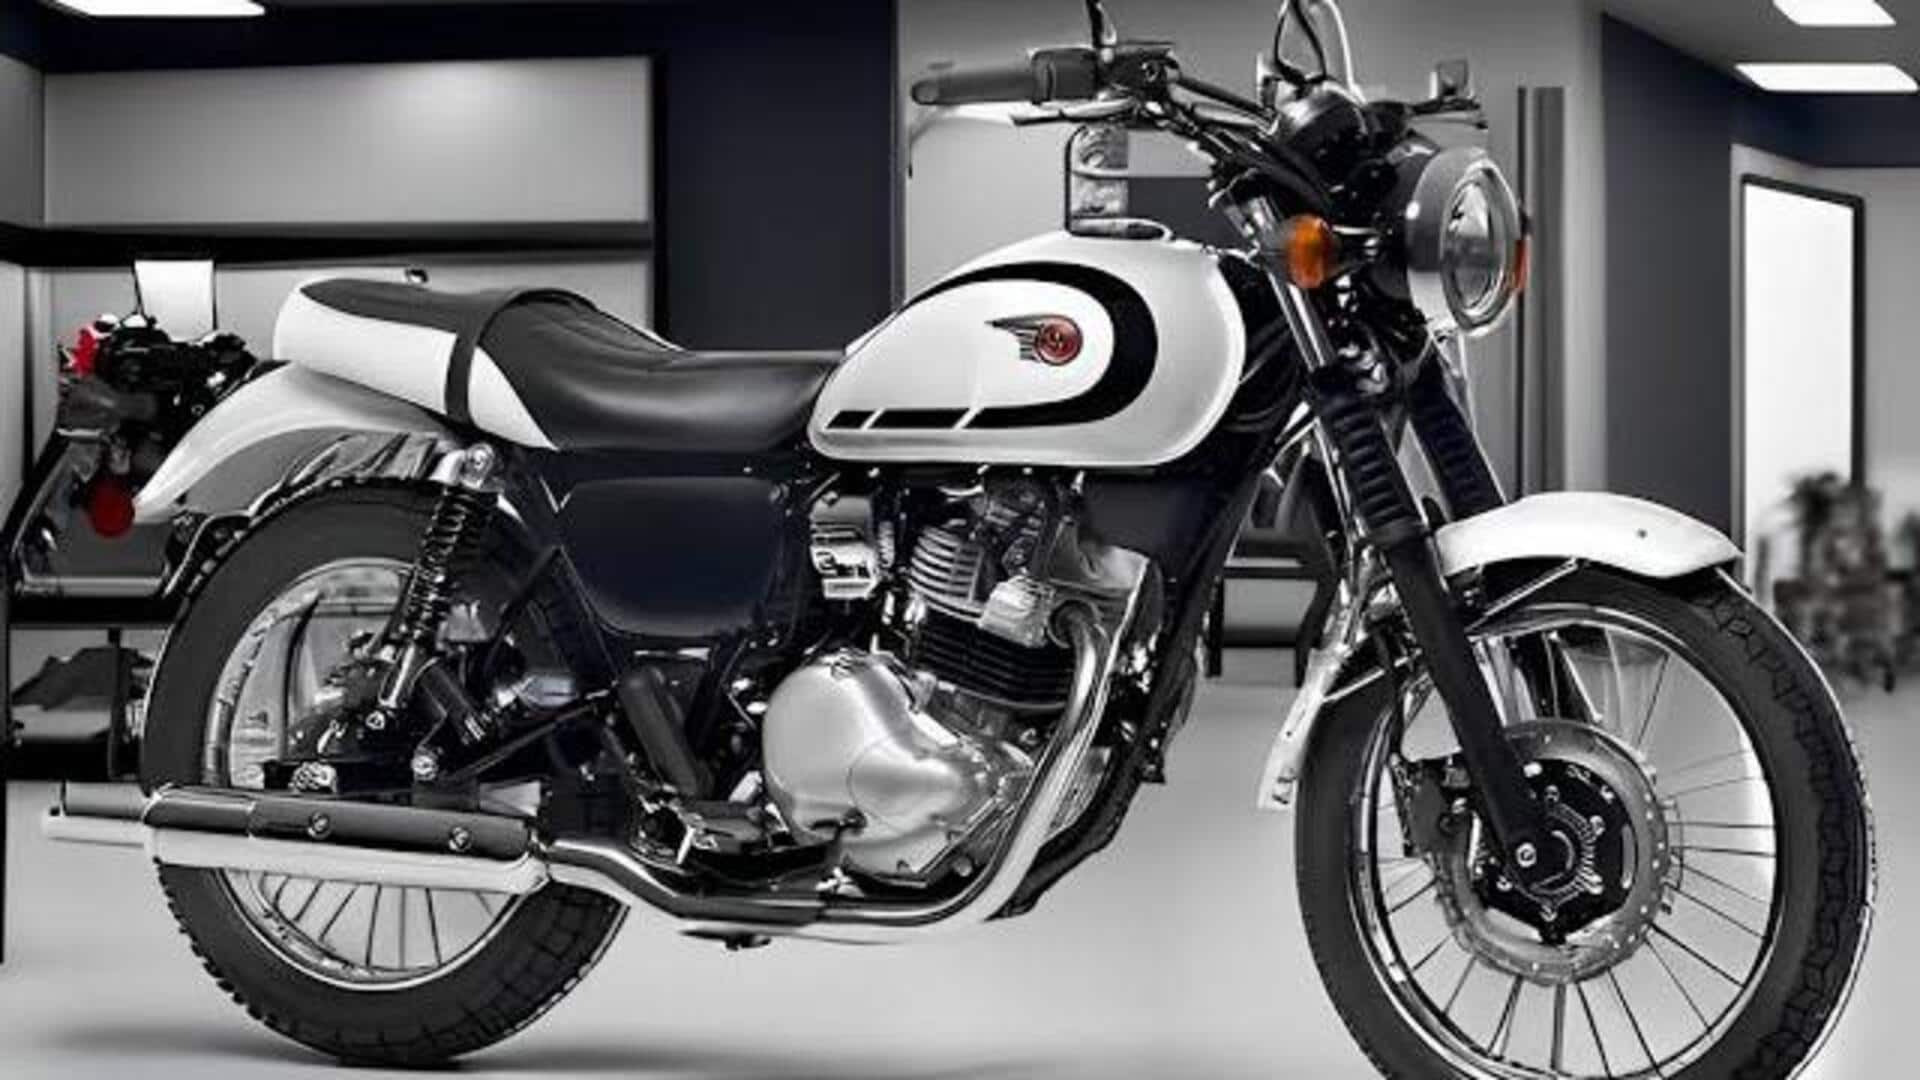 Kawasaki launches W230 classic roadster bike: Check top features